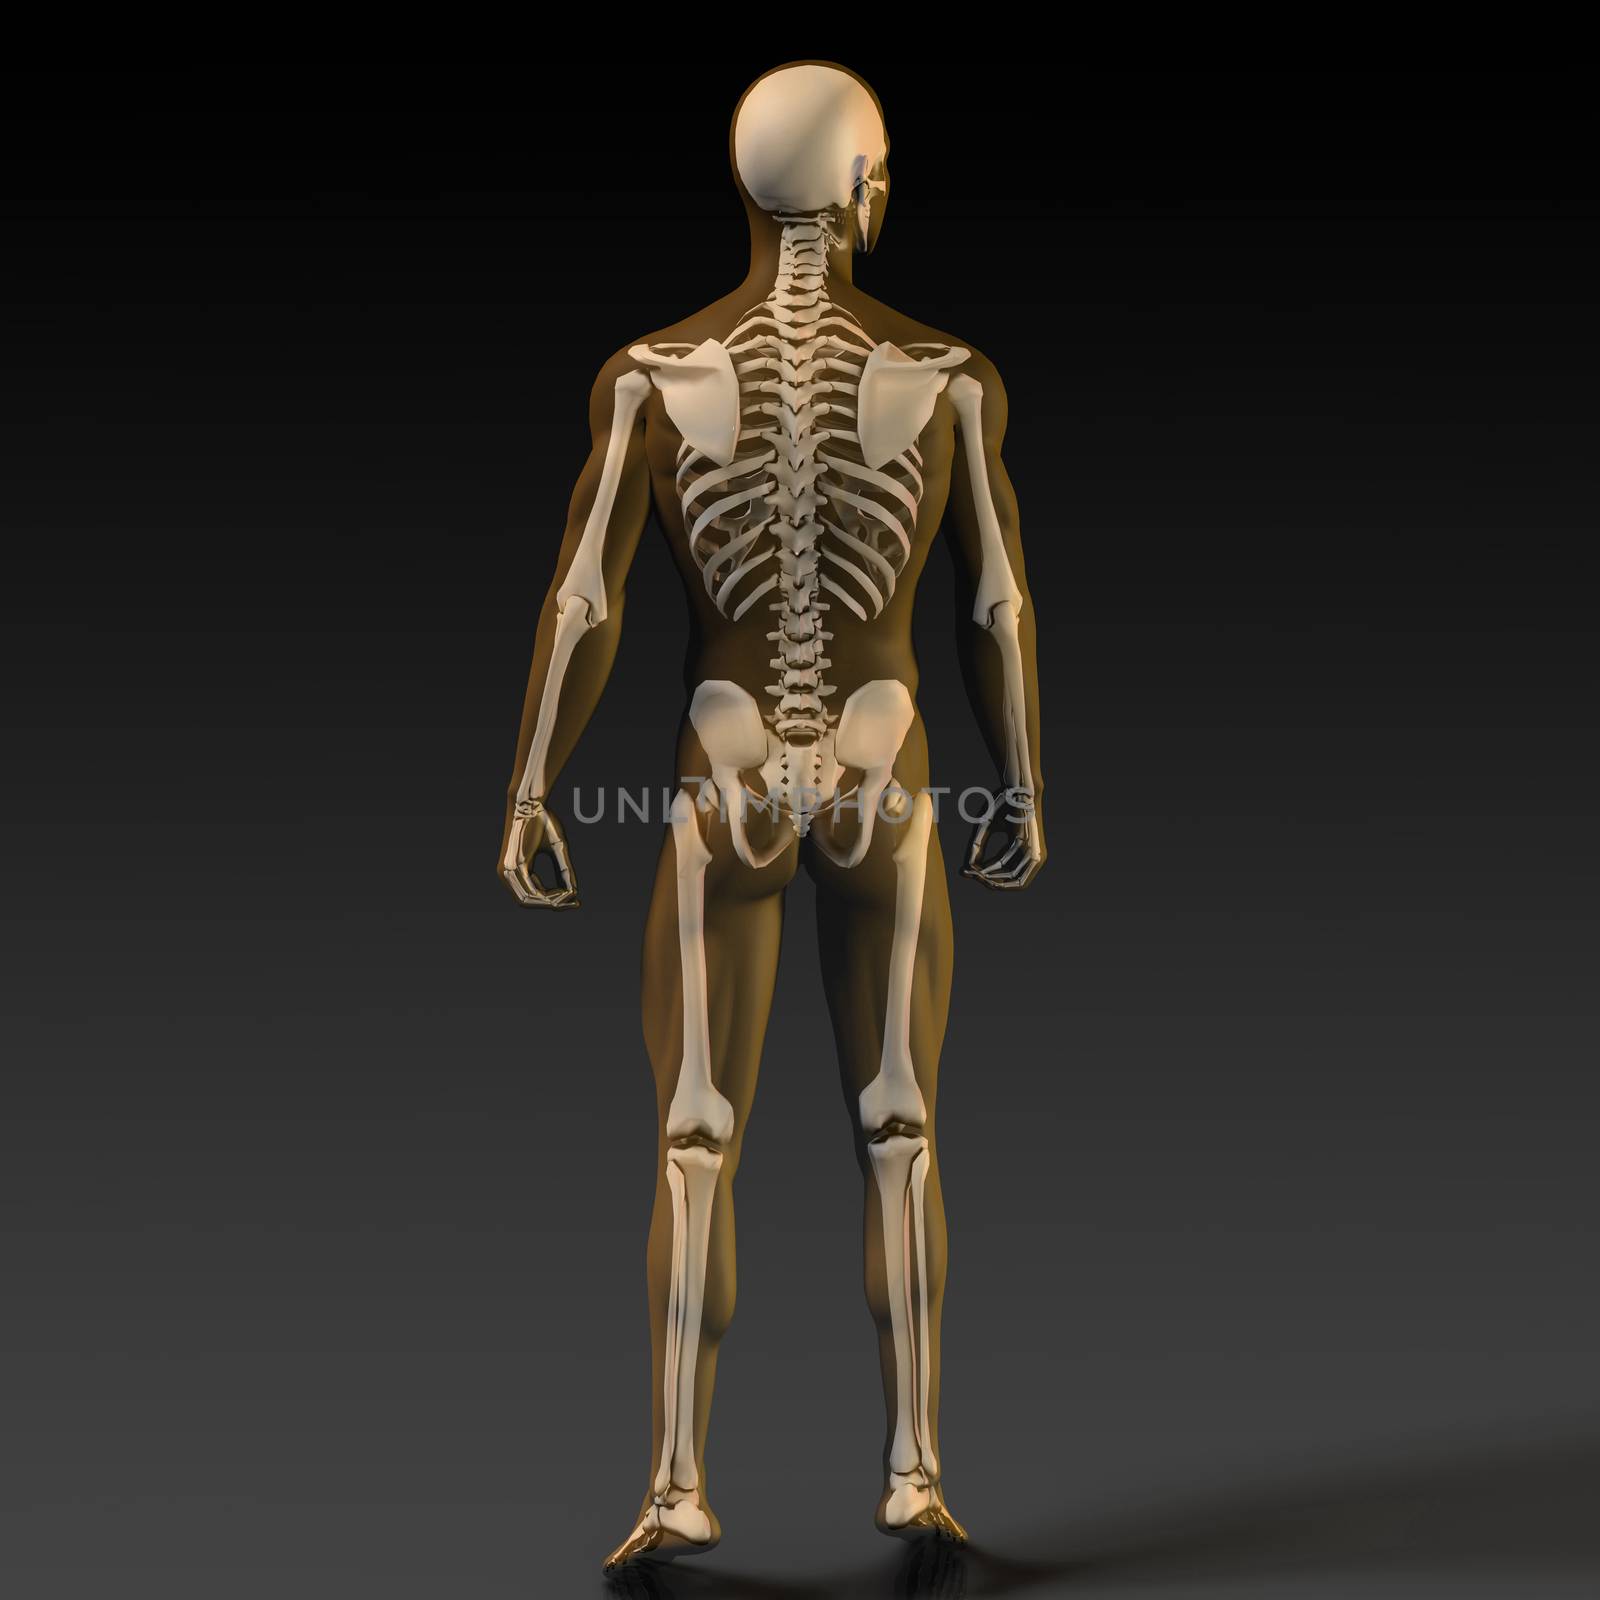 Human Bone Structure Diagram by kentoh